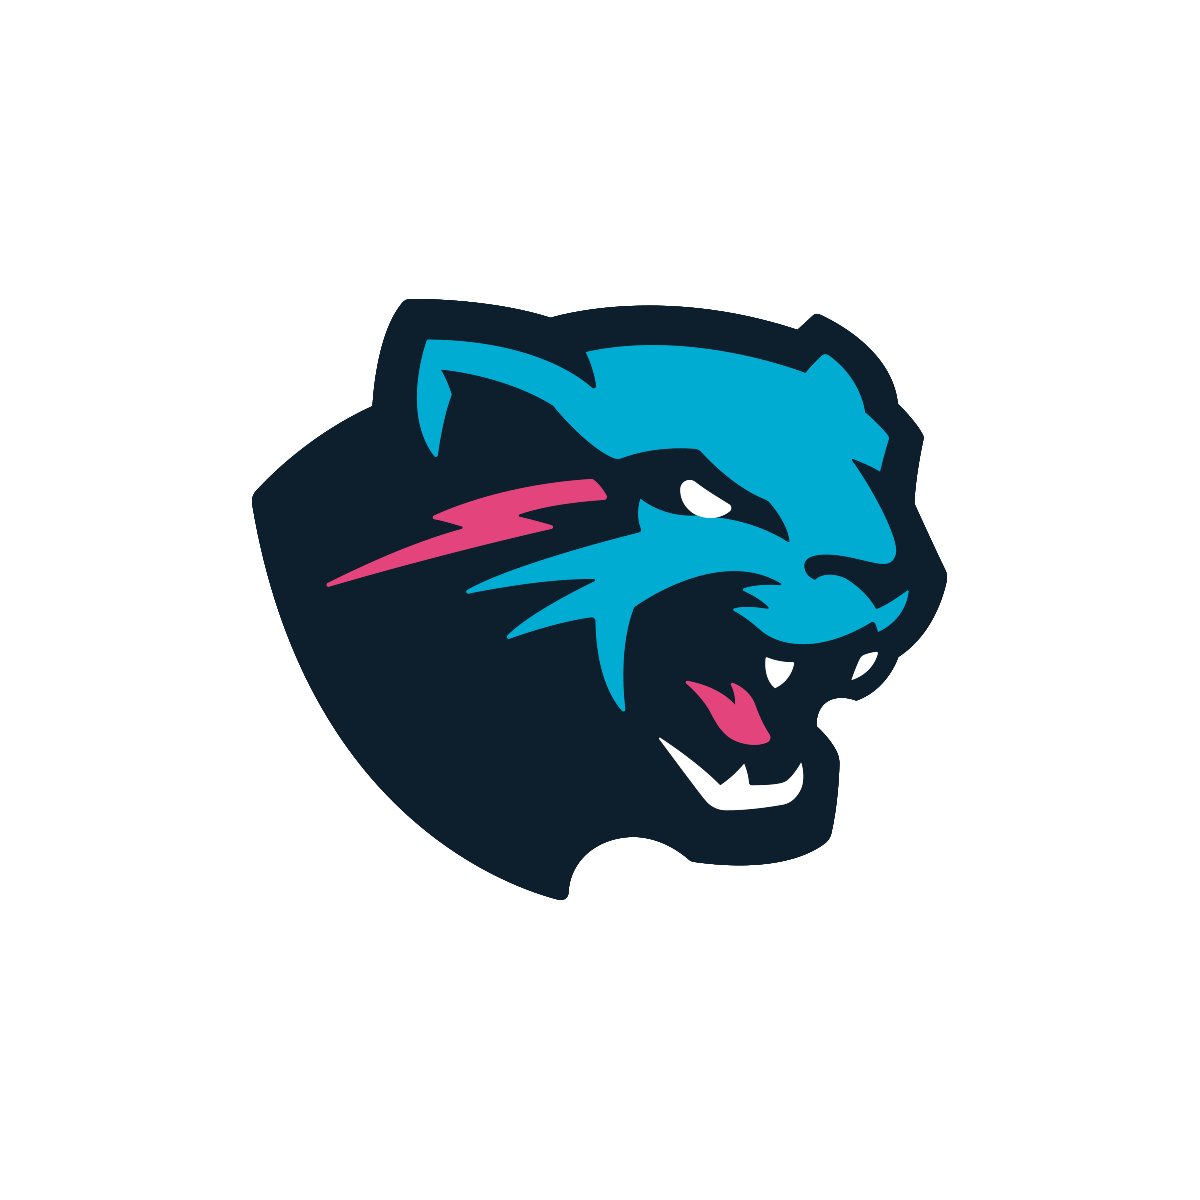 Mr Beast Logo Redesign by Koen on Dribbble